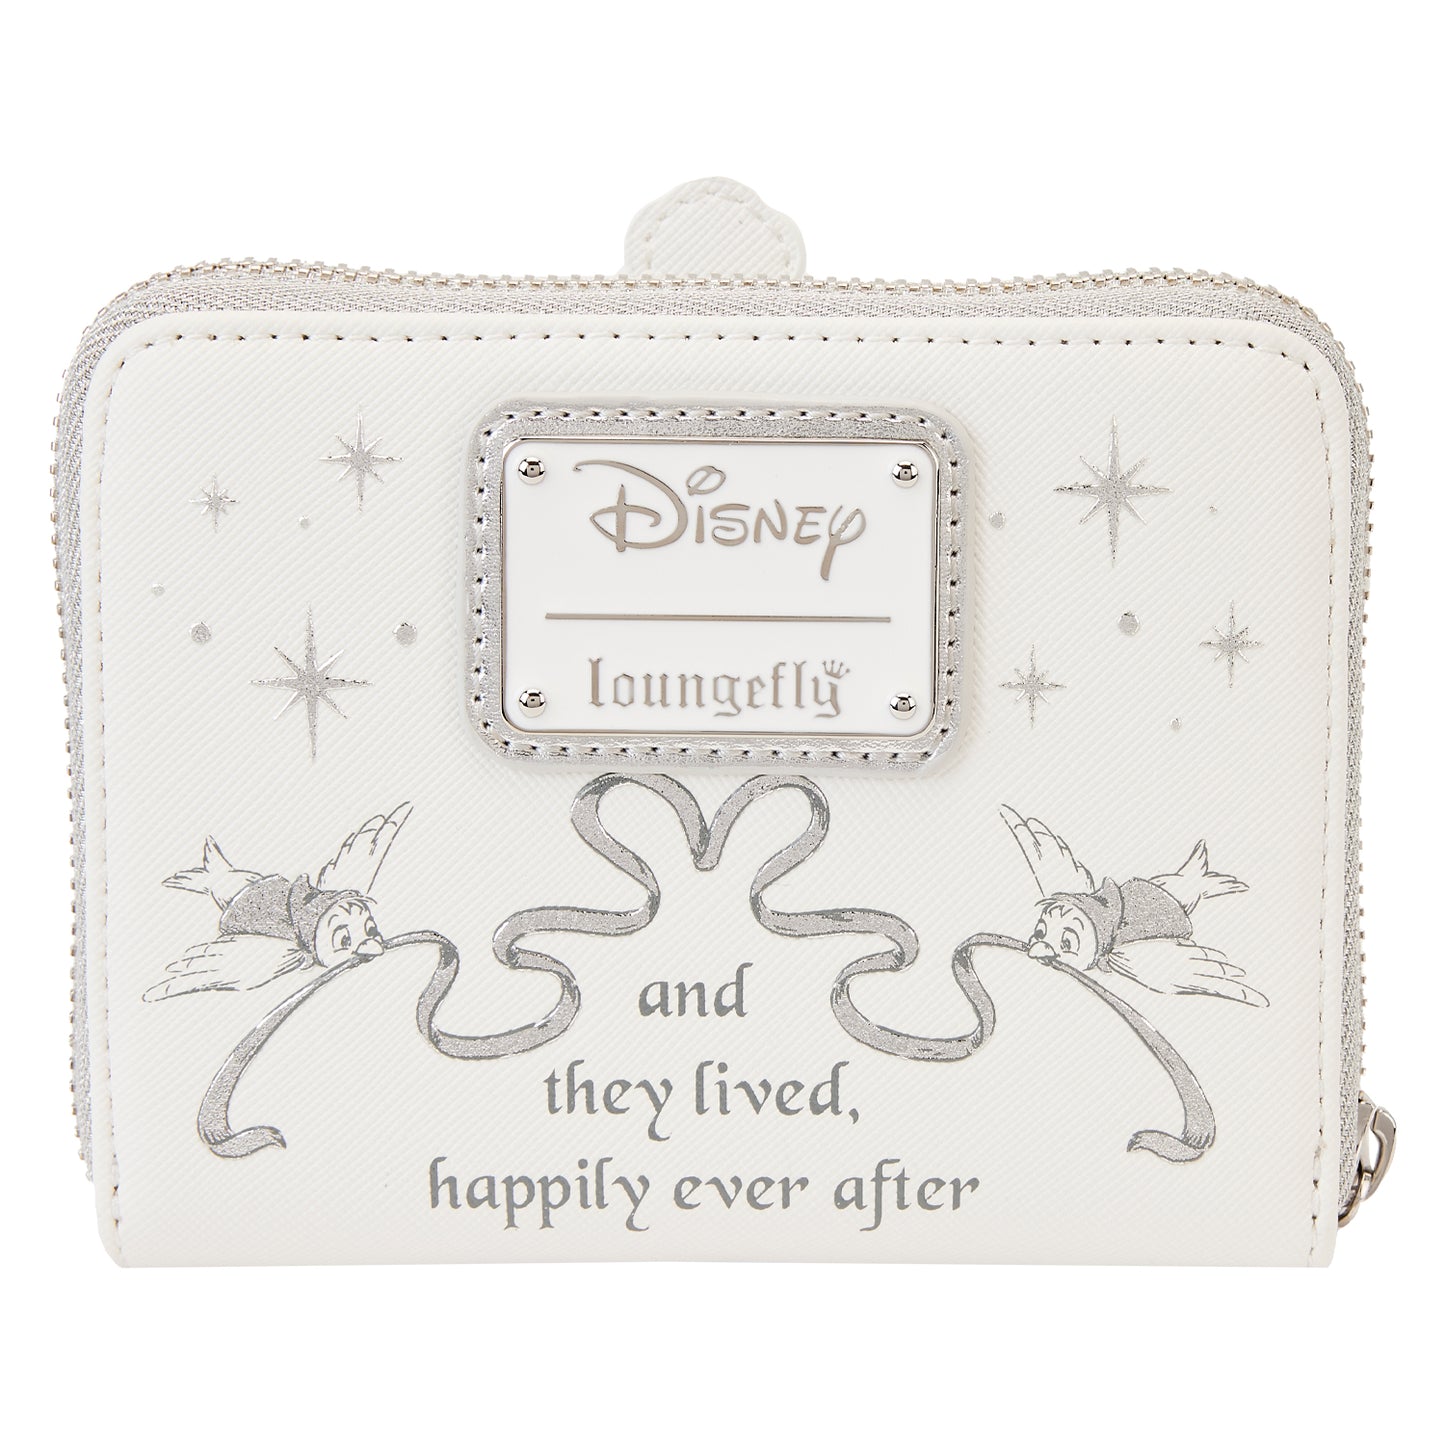 Loungefly Disney Cinderella Happily Ever After Zip-Around Wallet